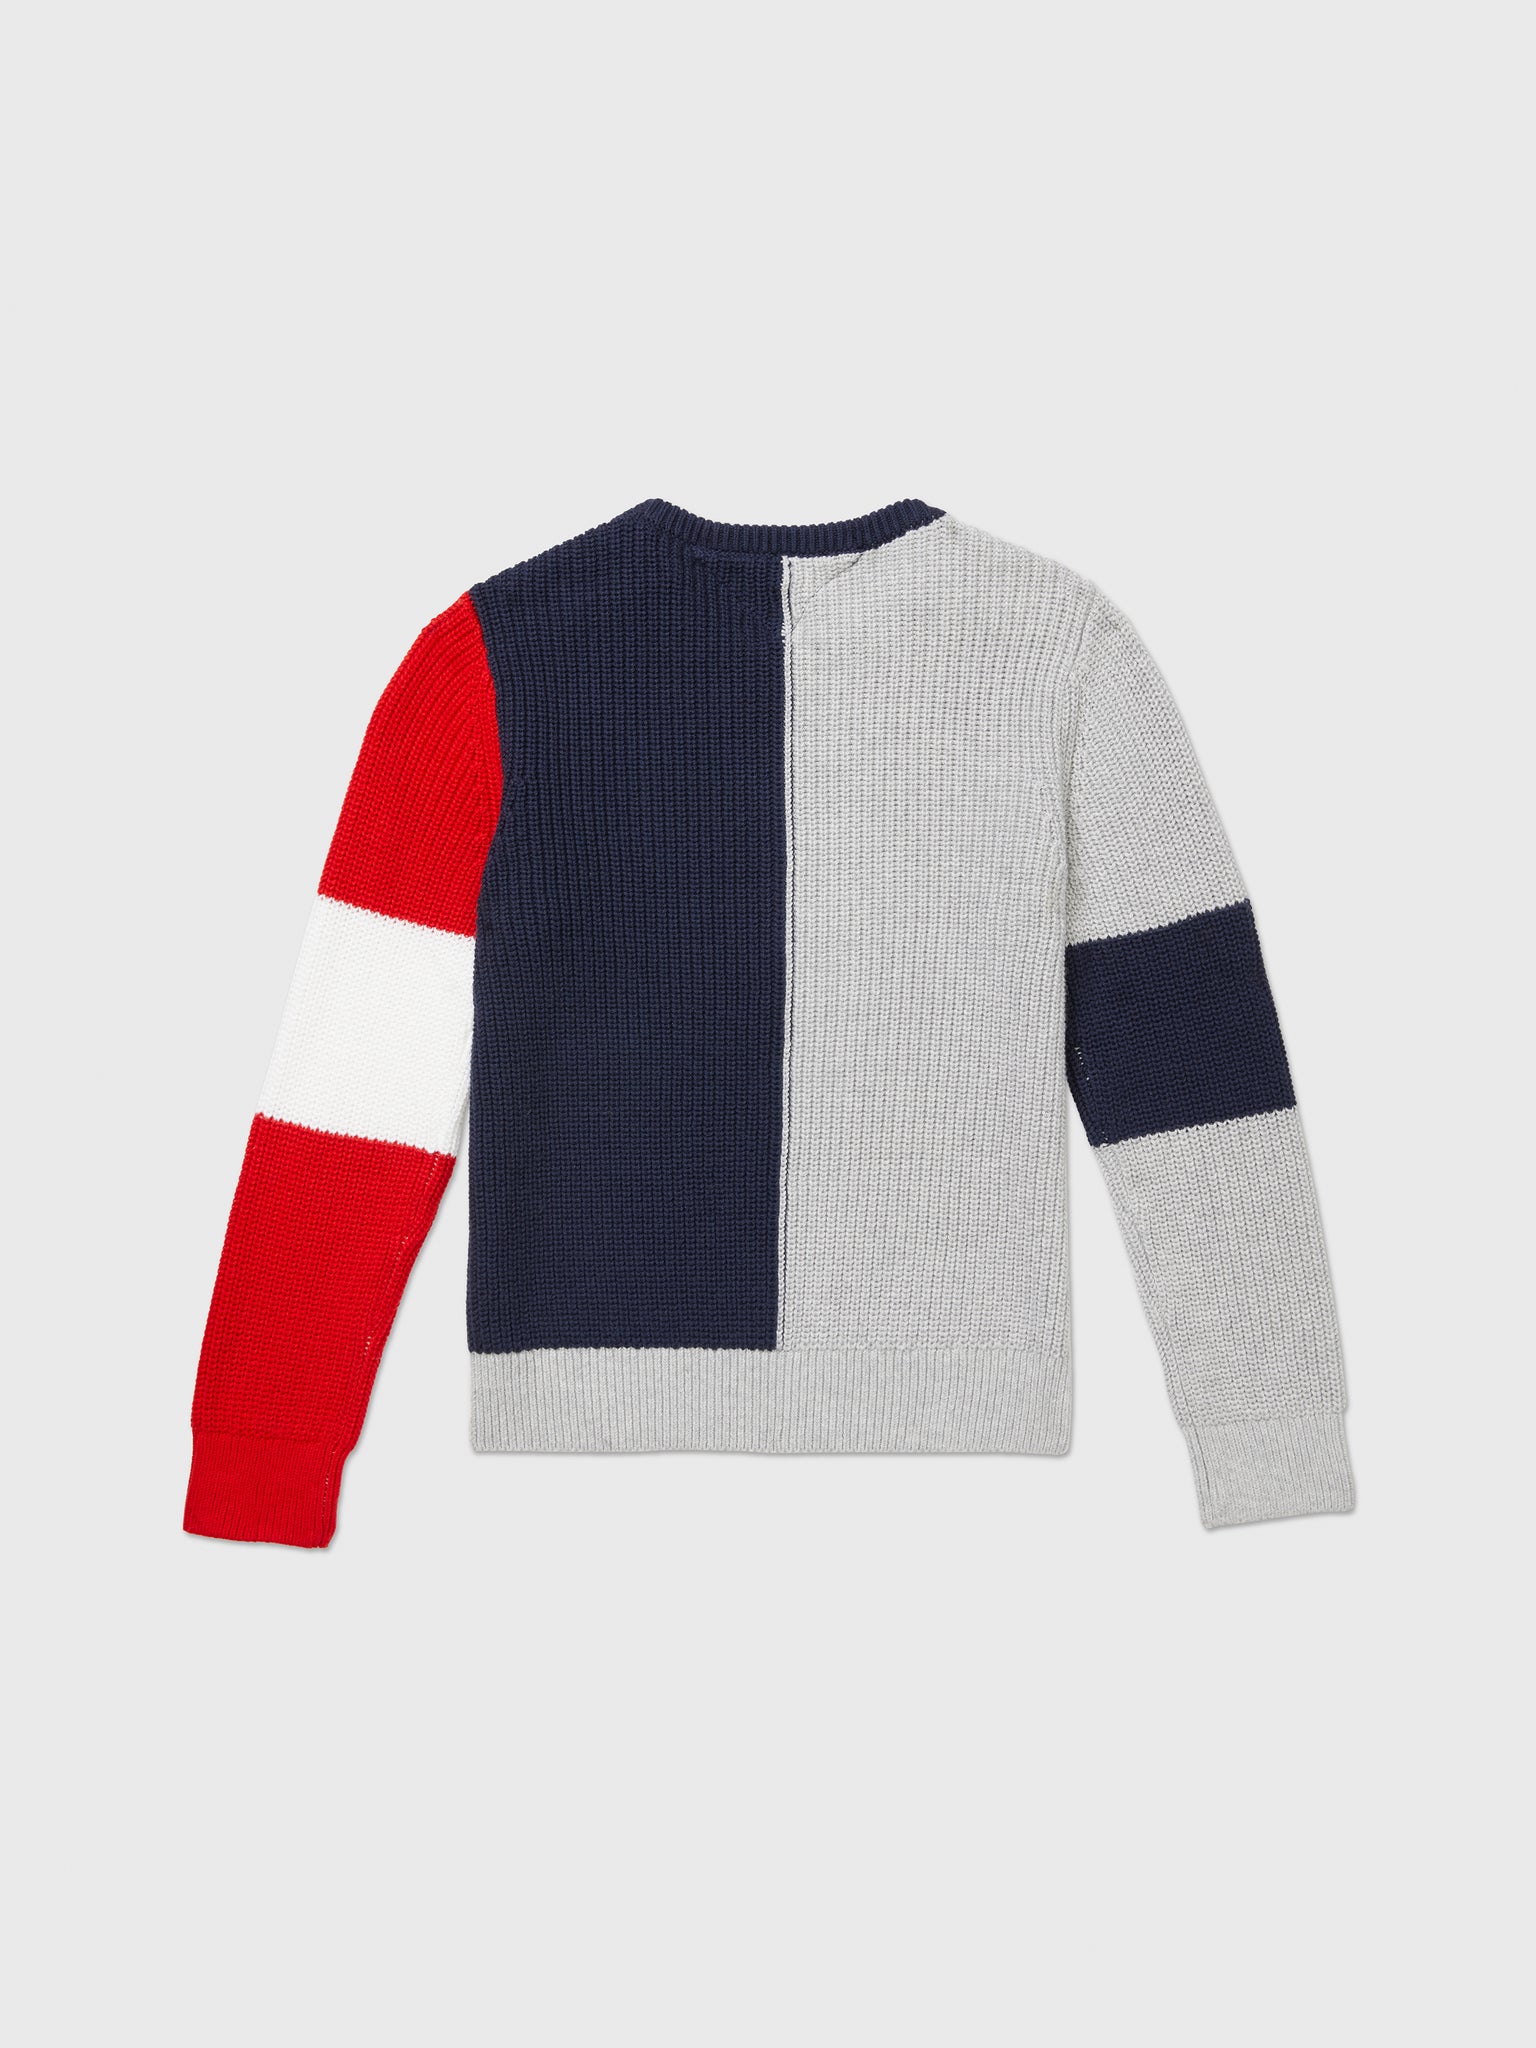 Colourblock Sweater (Kids) - Grey Heather